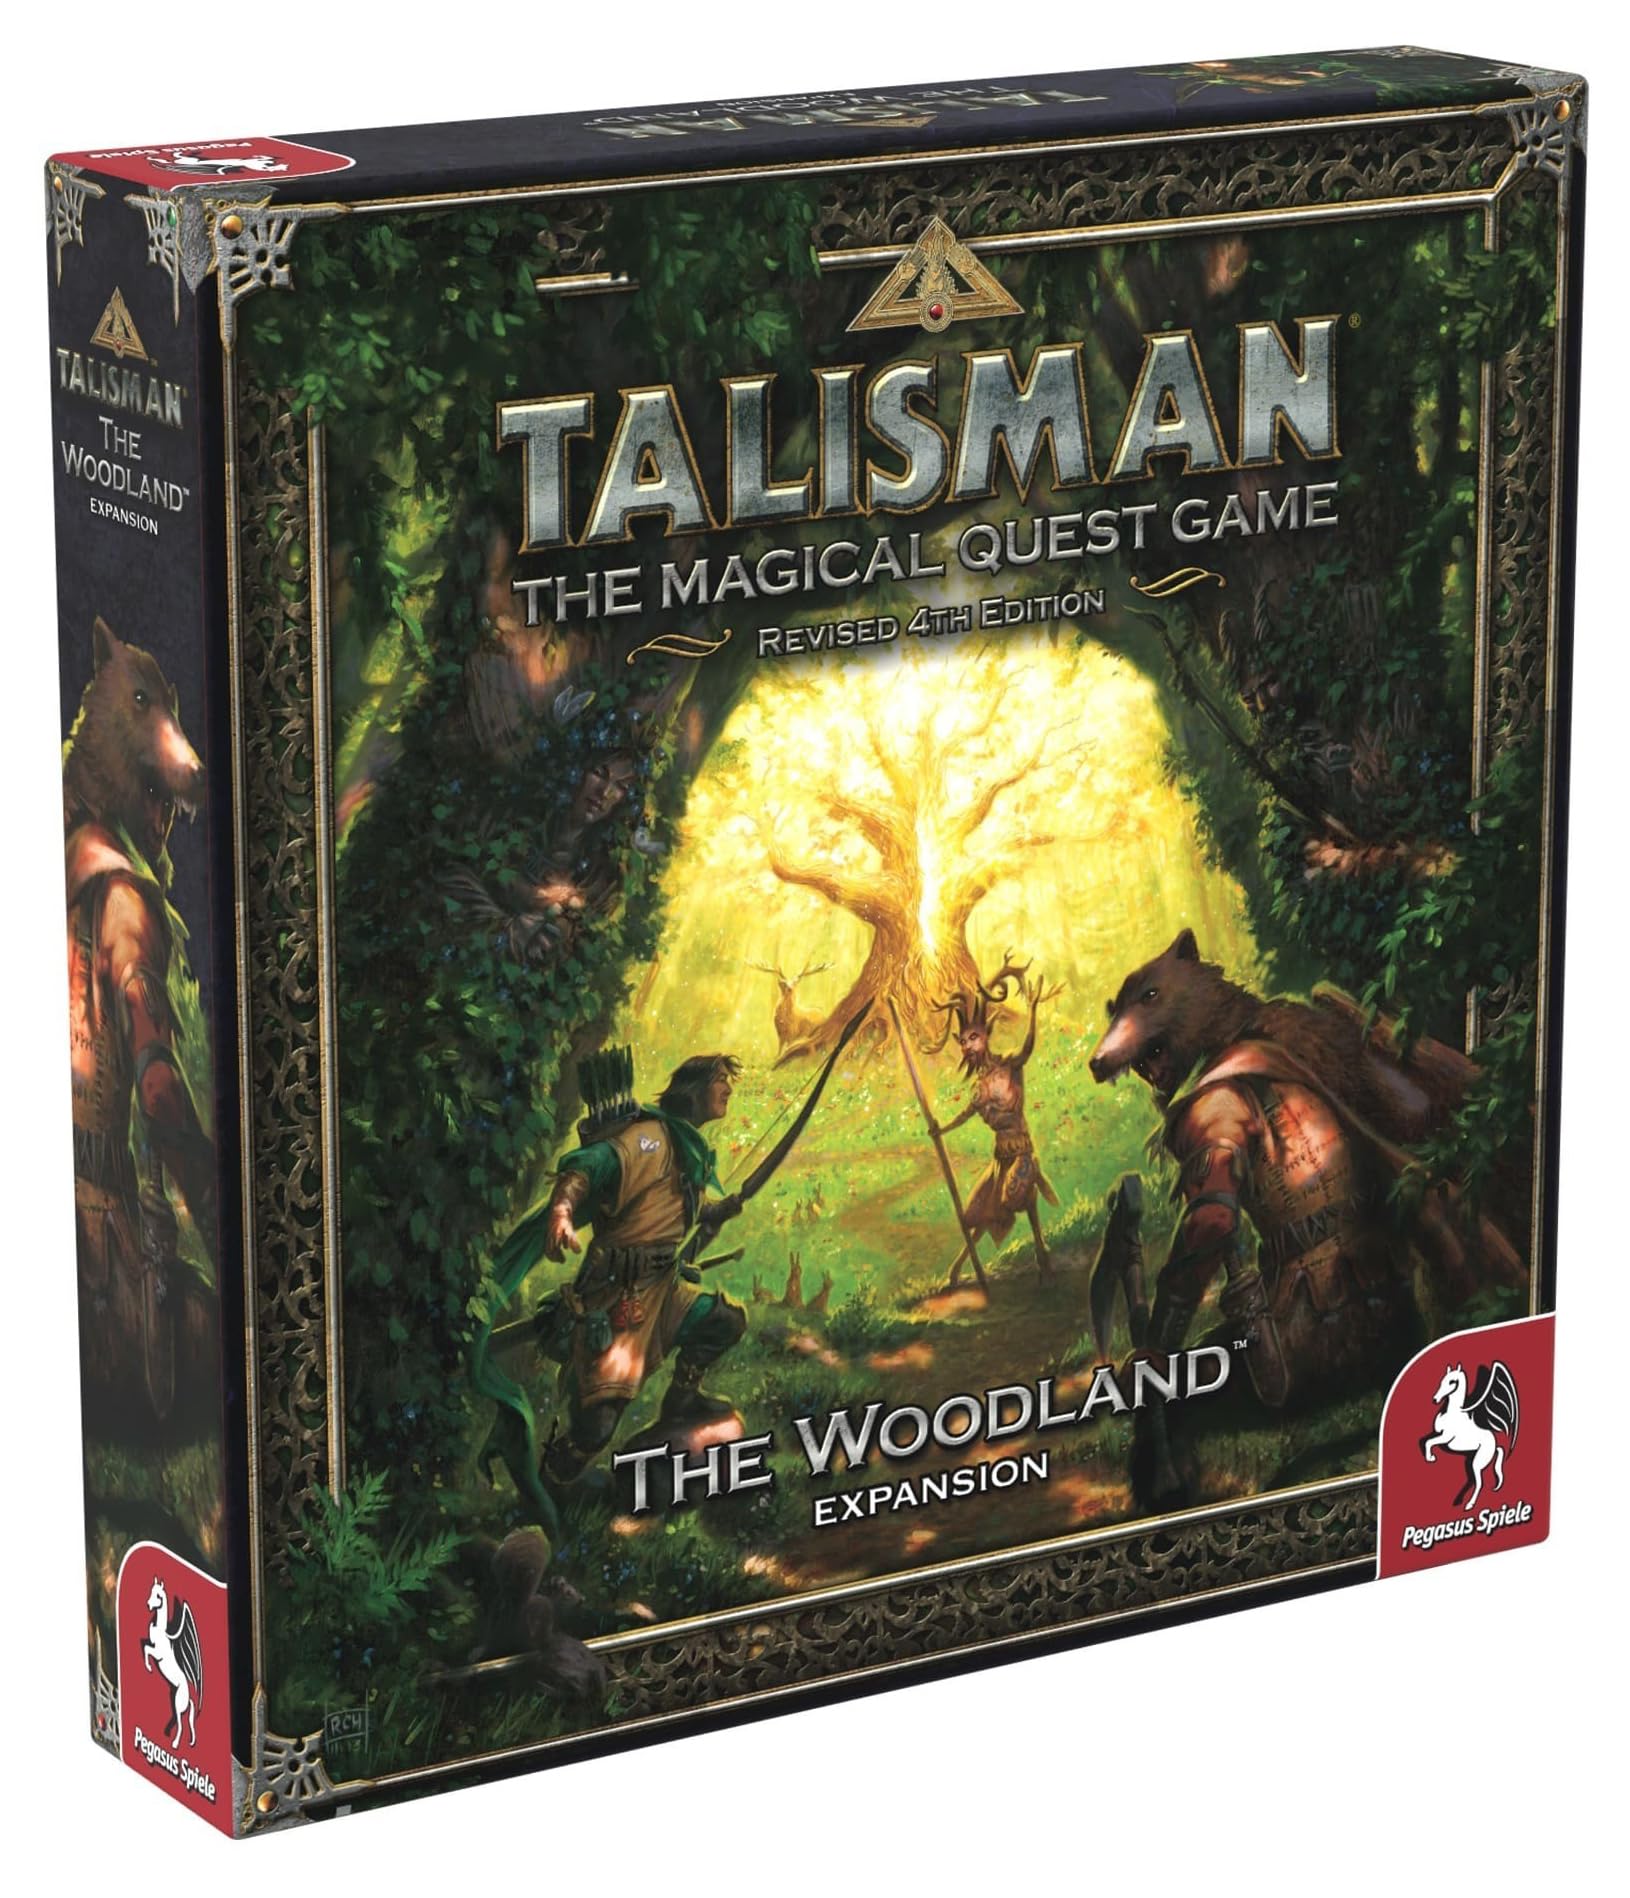 Pegasus Spiele North America Board Games Pegasus Spiele North America Talisman: The Woodlands Expansion